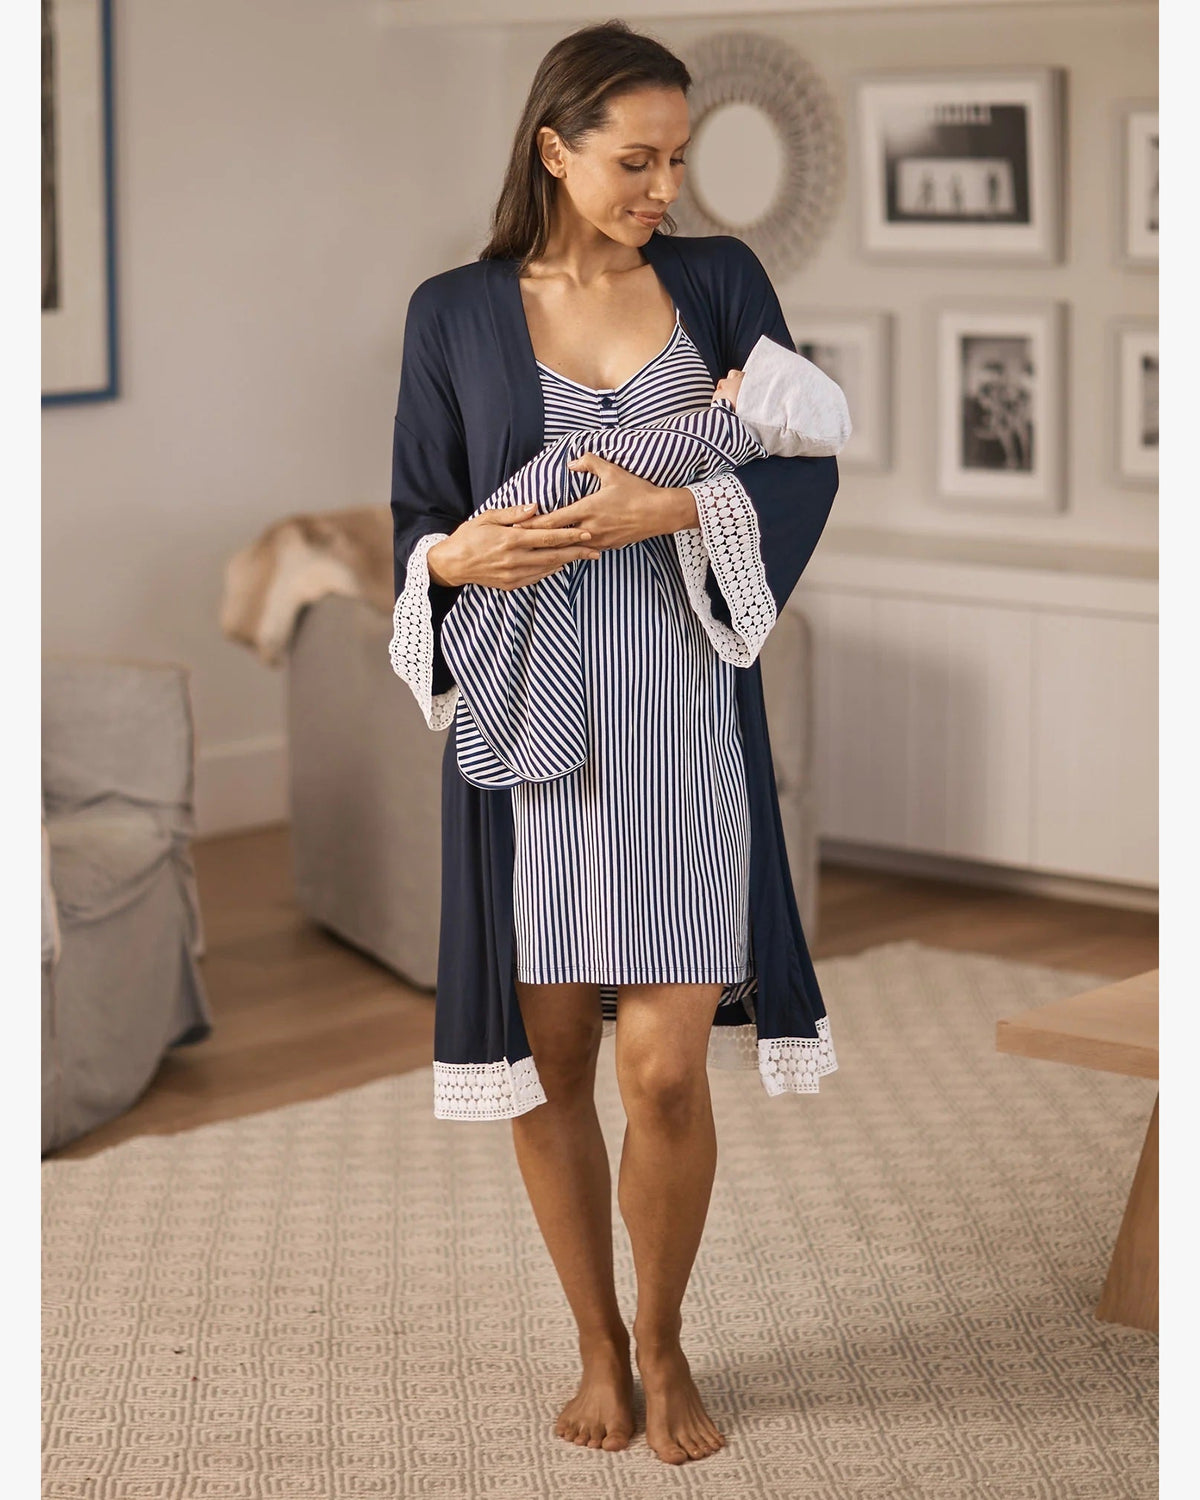 Trudy Super Mom Super Tired Maternity and Nursing Pajamas Set